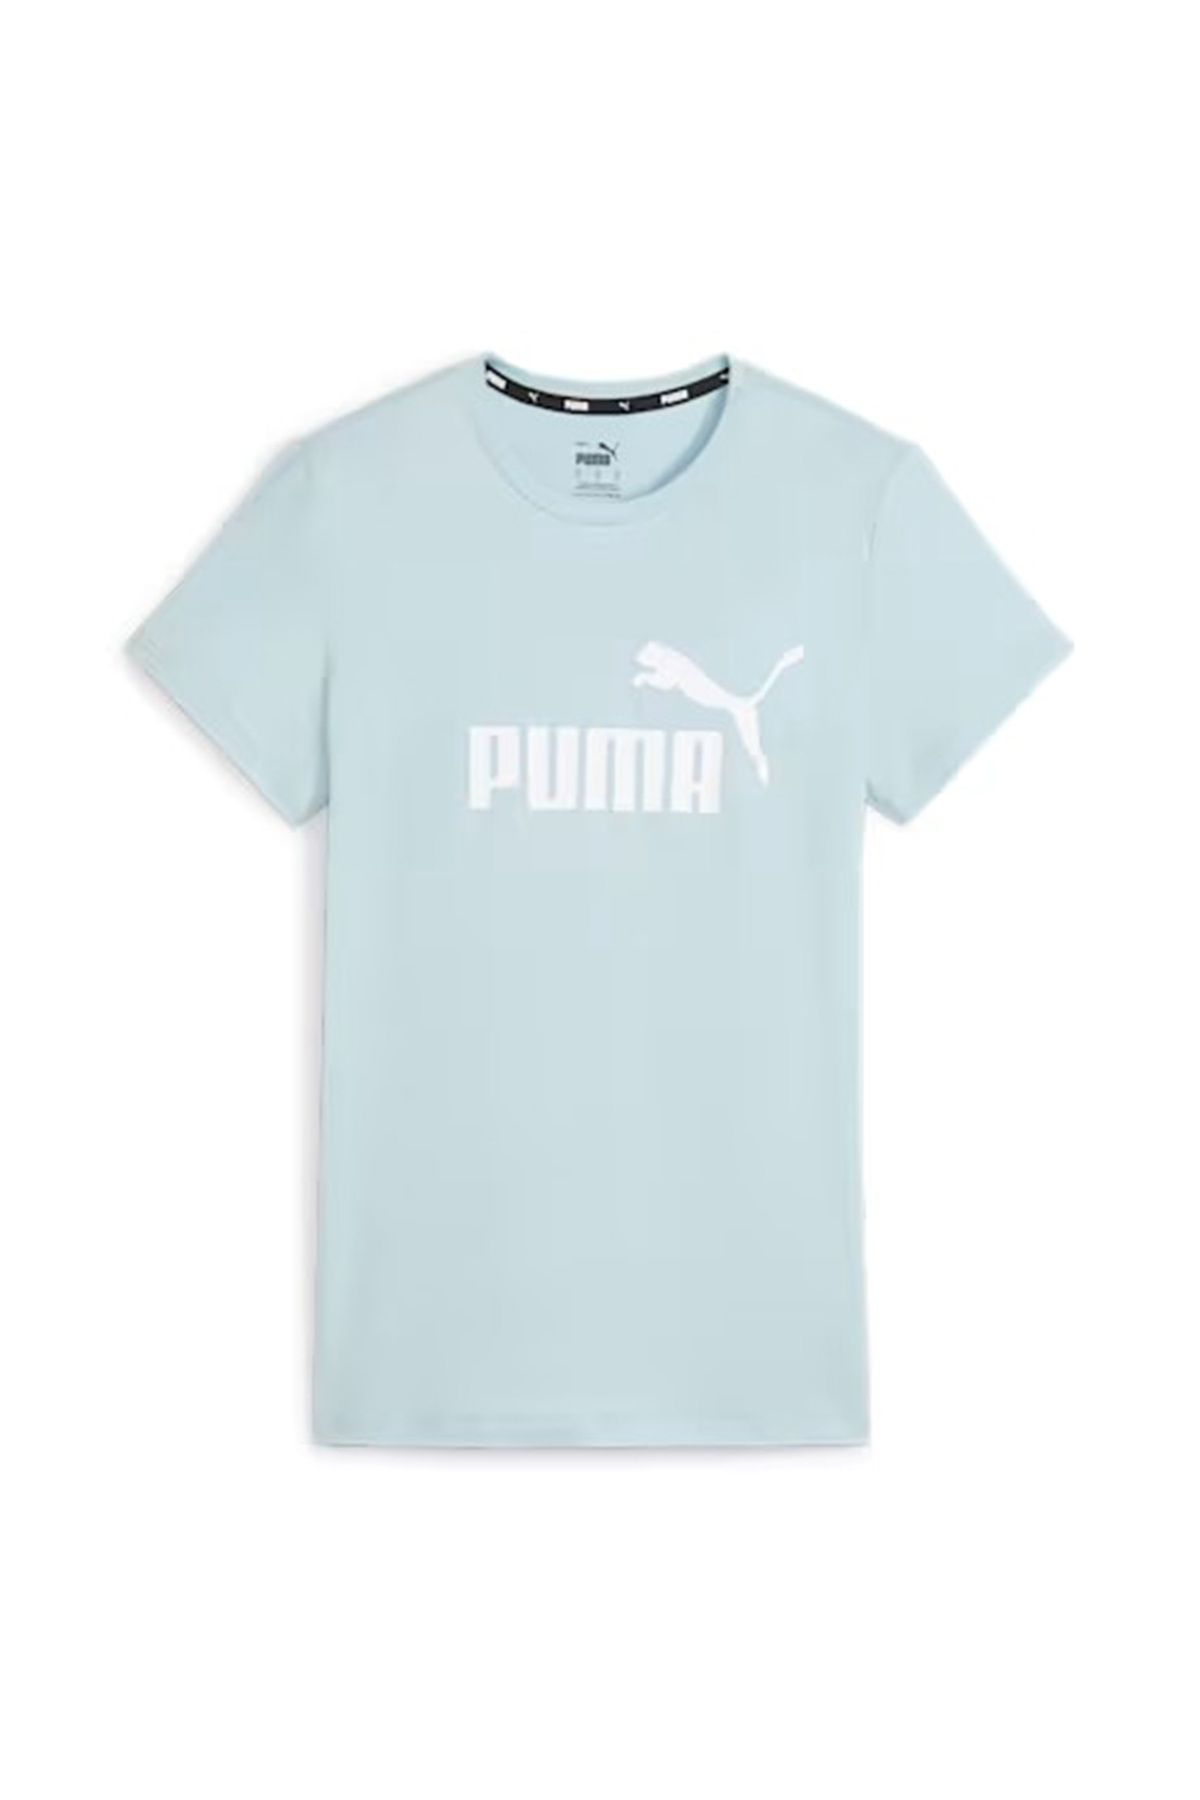 Puma Essentials Kadın Mavi Günlük Stil T-Shirt 58677525